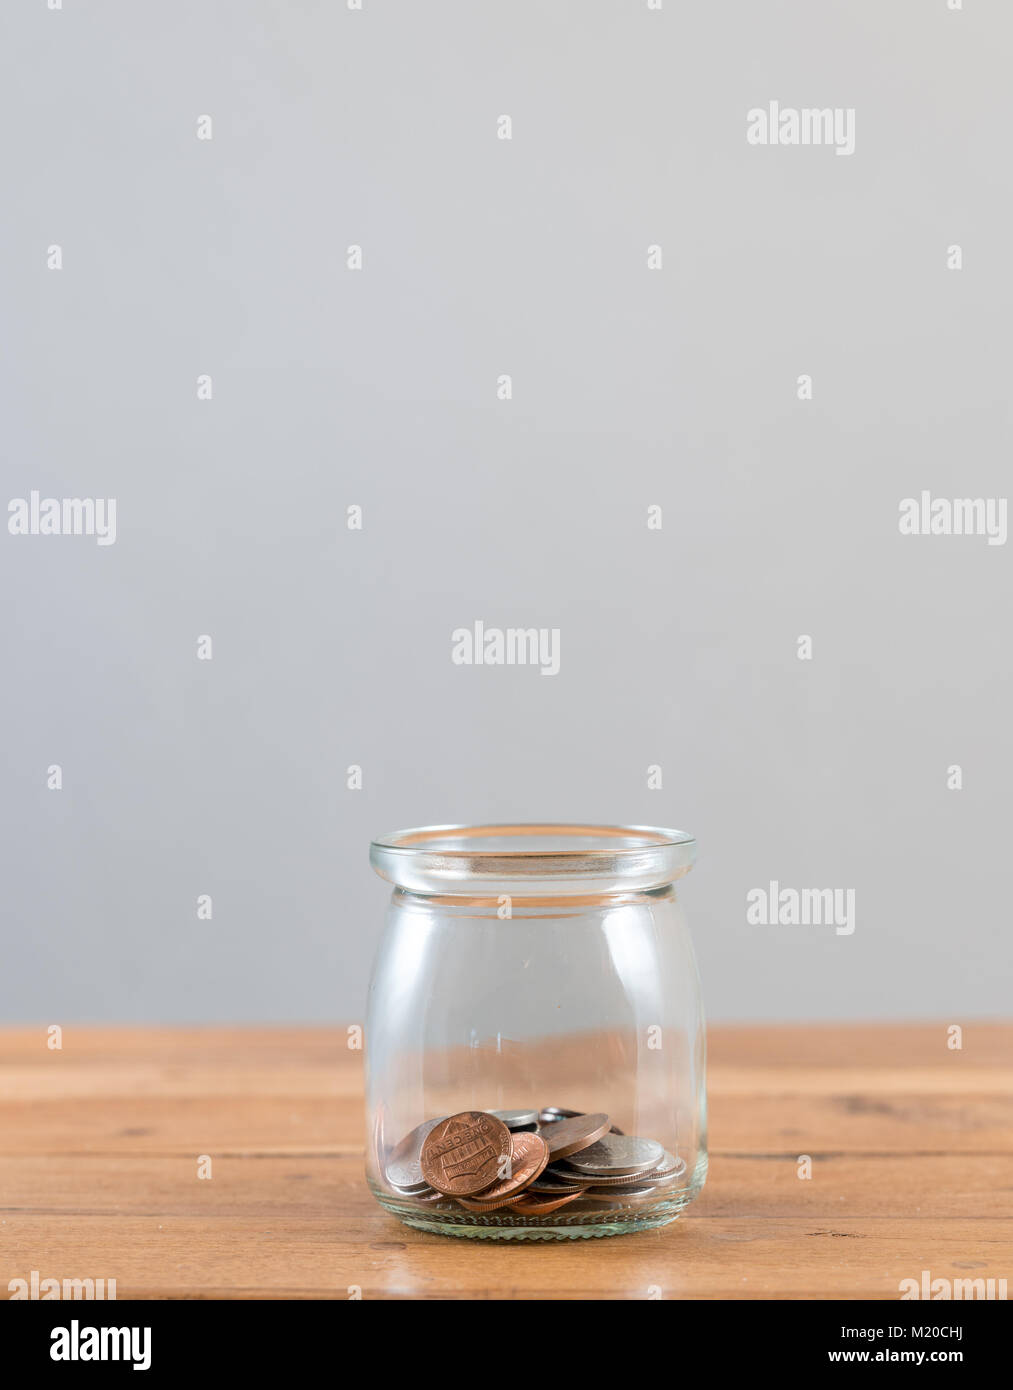 Loose change inside glass jar to represent retirement savings   Stock Photo